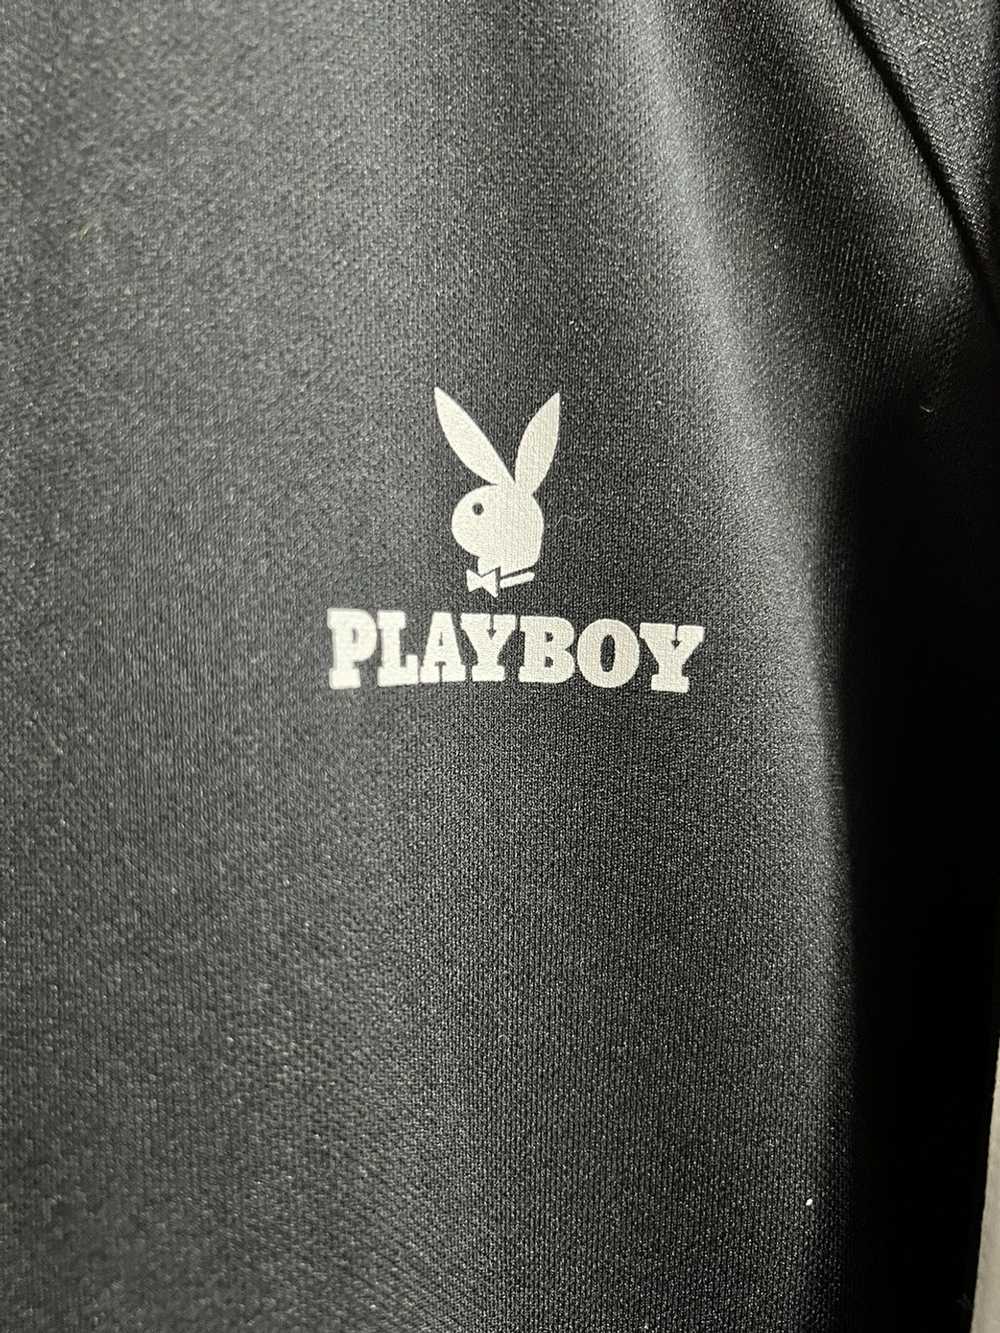 Playboy Playboy Bunny Big Logo Zipper - image 3